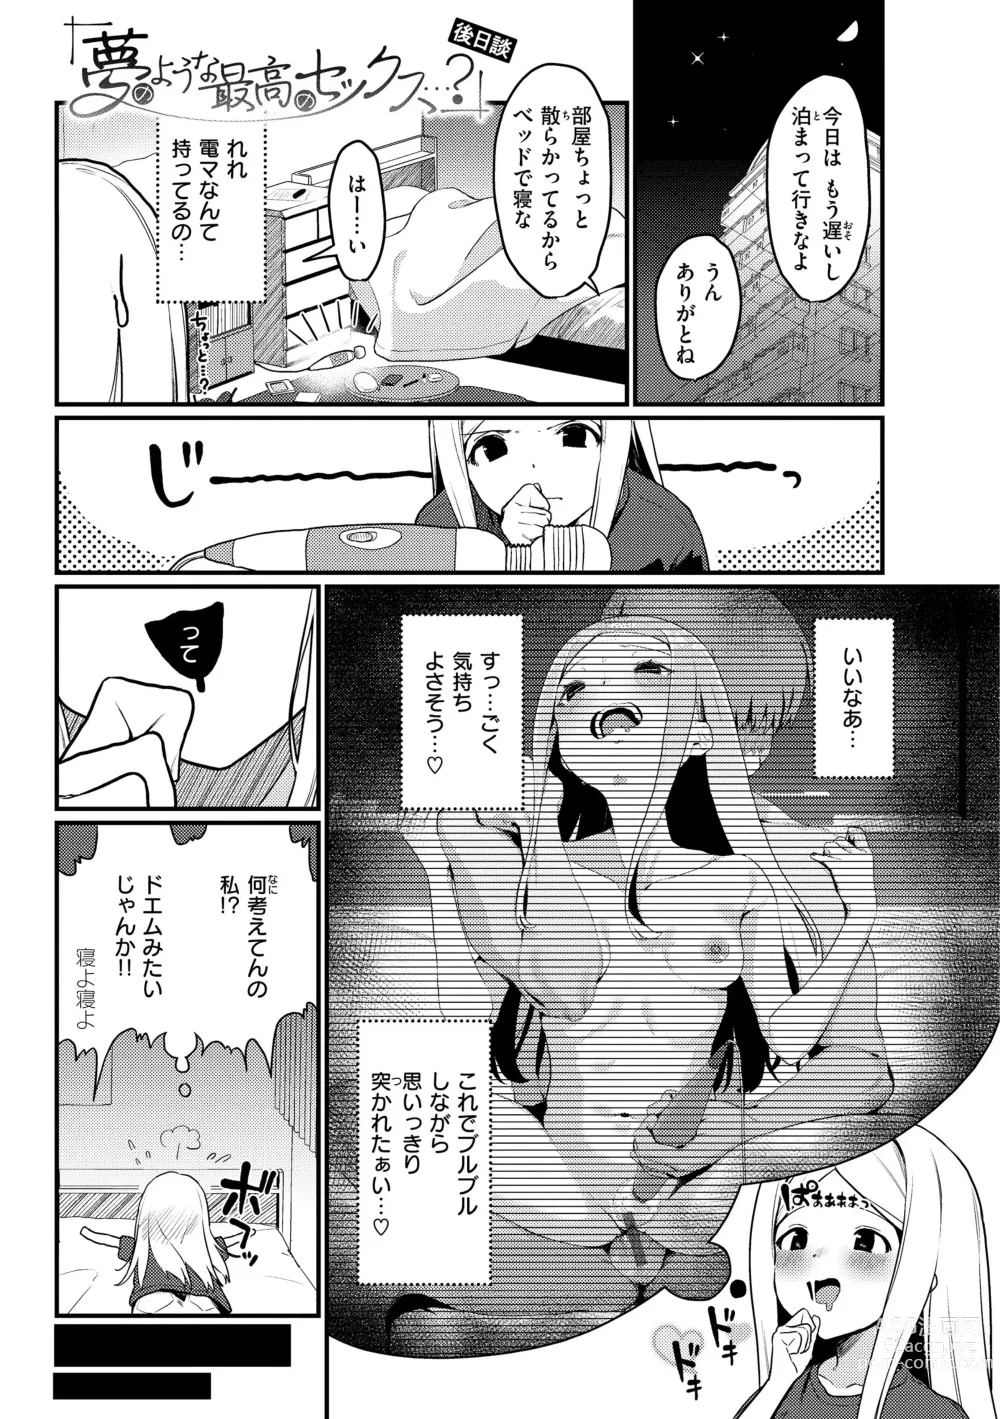 Page 157 of manga Wakarasete. - Show me reality.